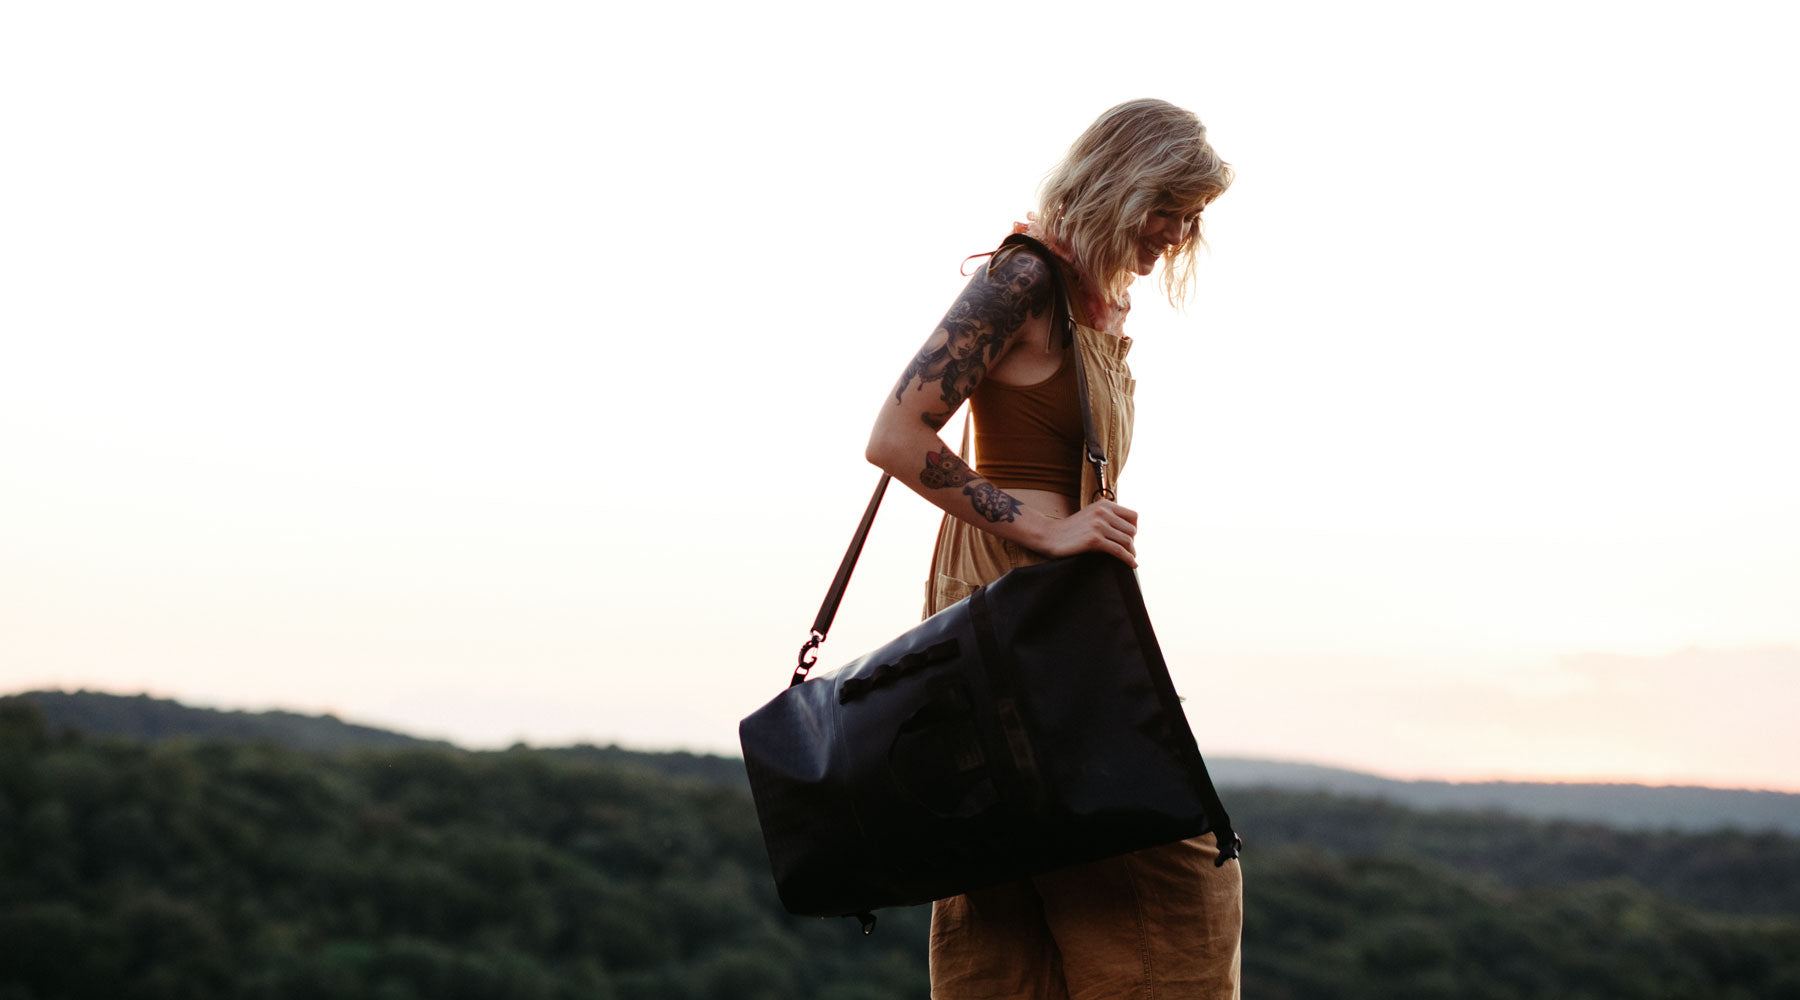 A woman carries the 45 liter black dirtbag on a climbing trip